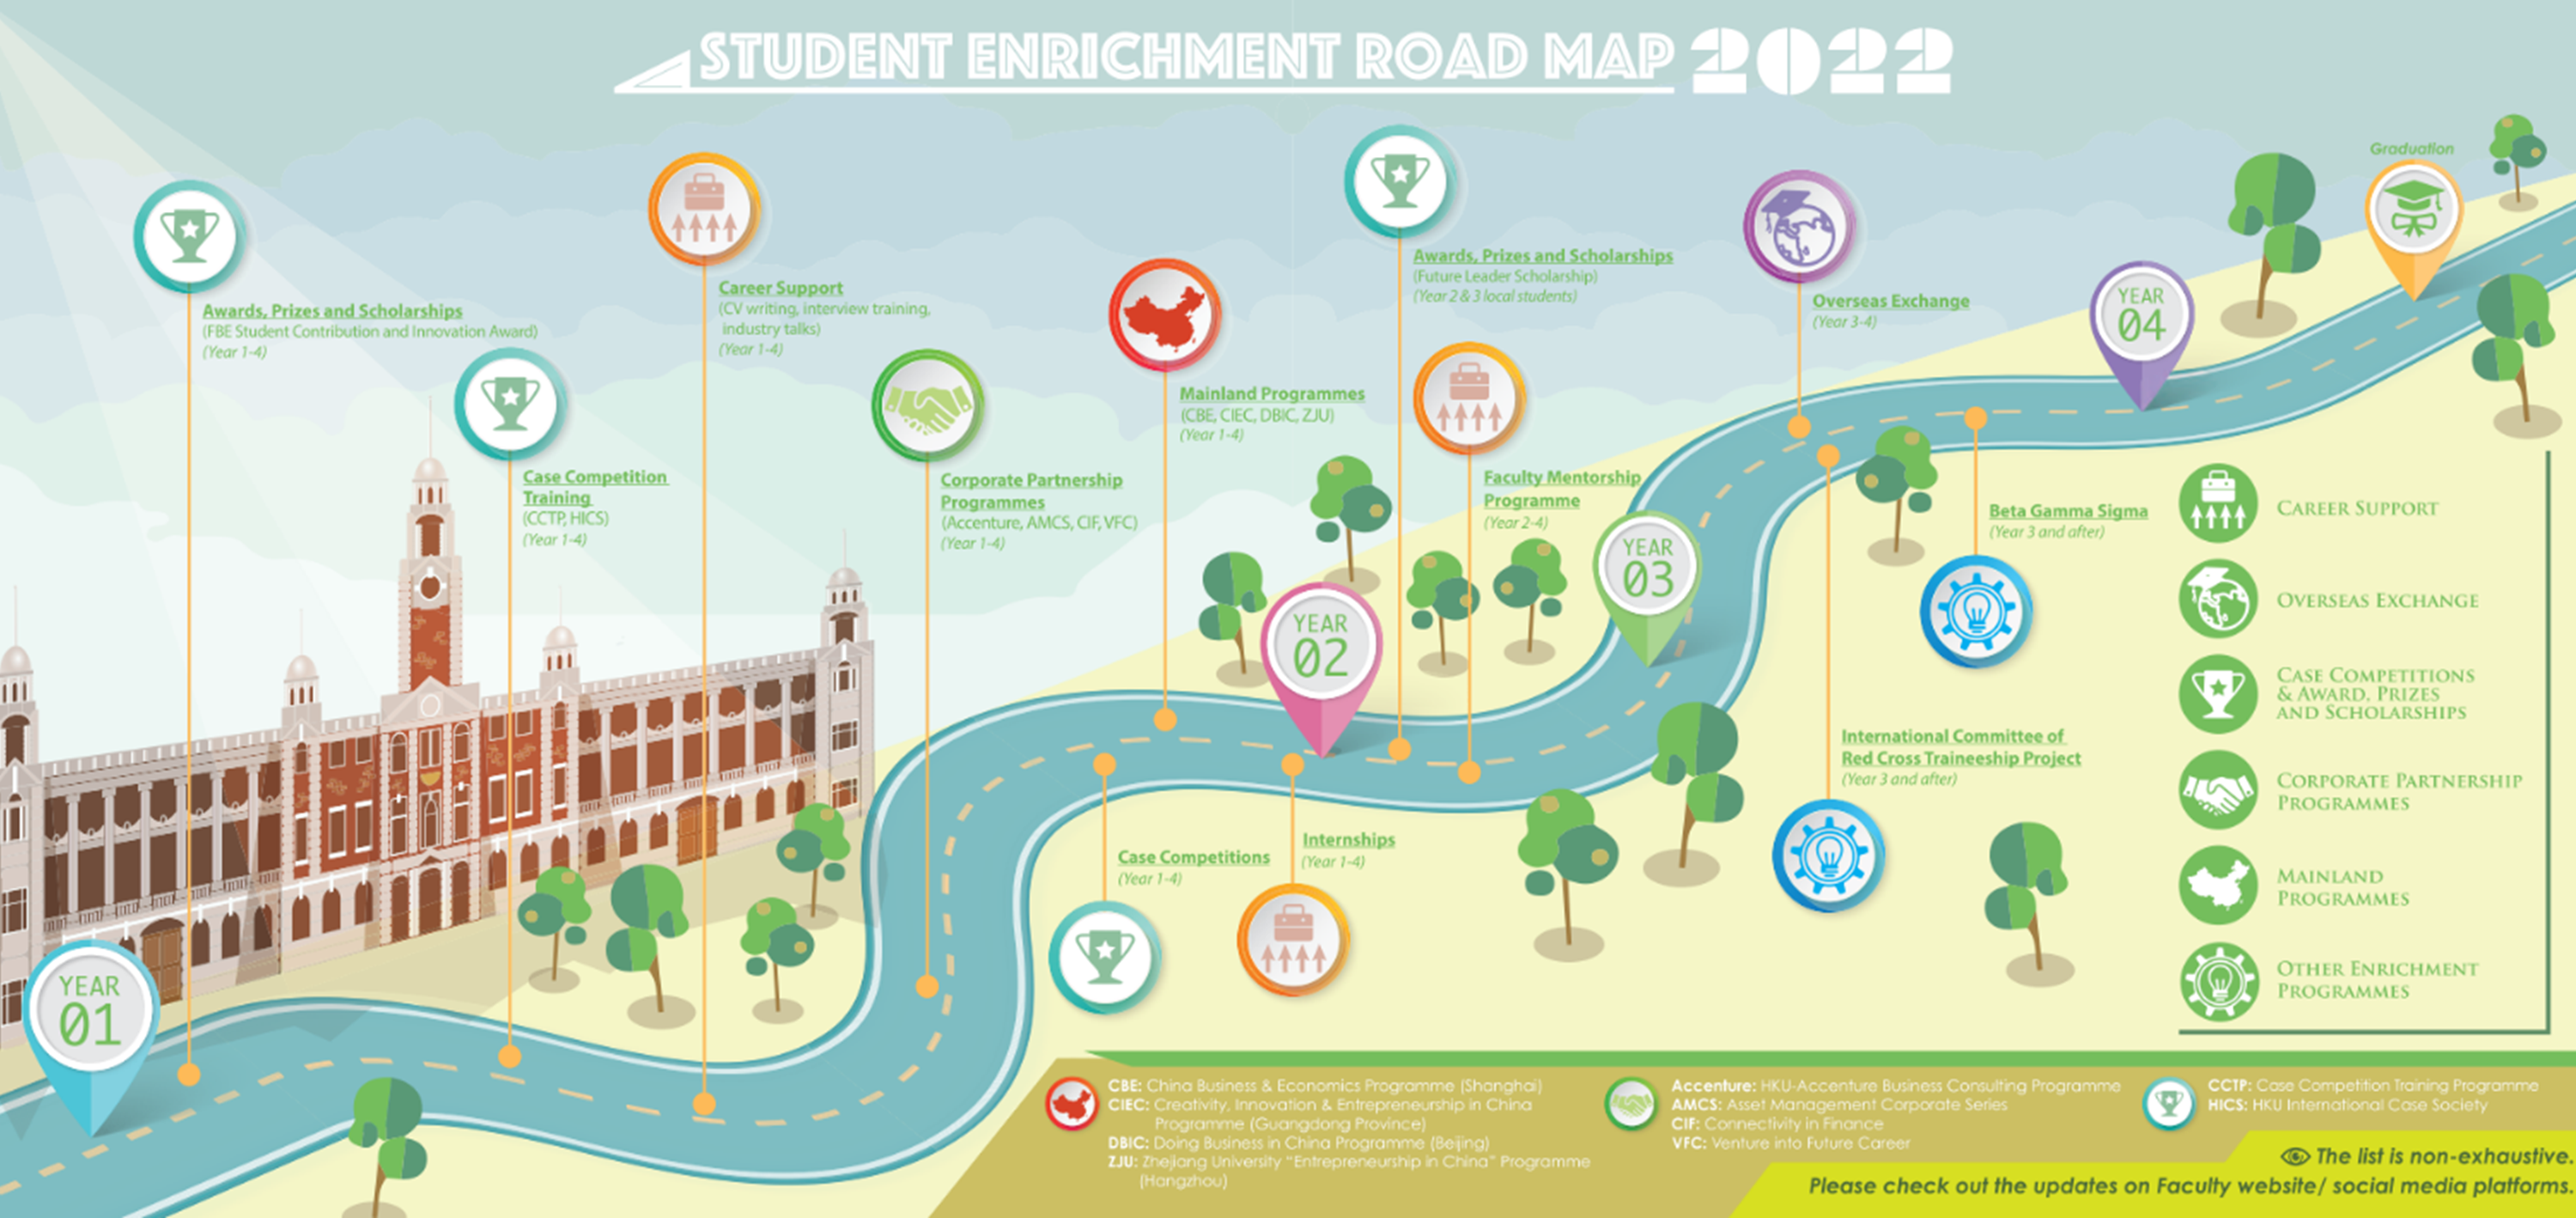 HKU Business School UG Student Enrichment Roadmap 2022